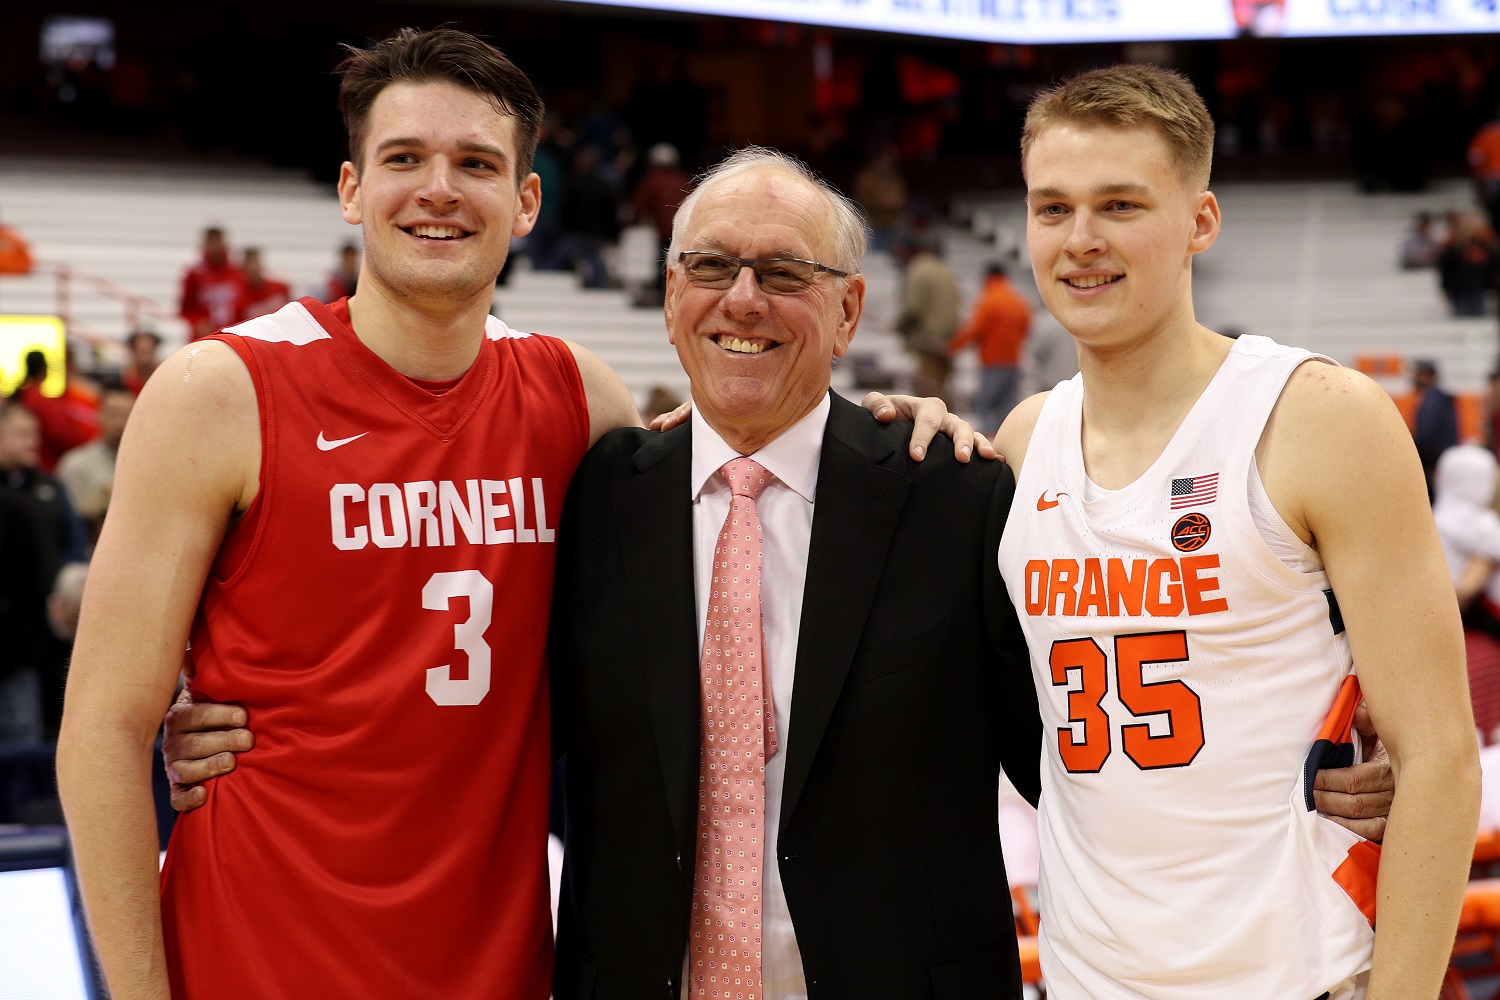 Jim Boeheim, center, will be coaching sons Jimmy and Buddy next season at Syracuse University.